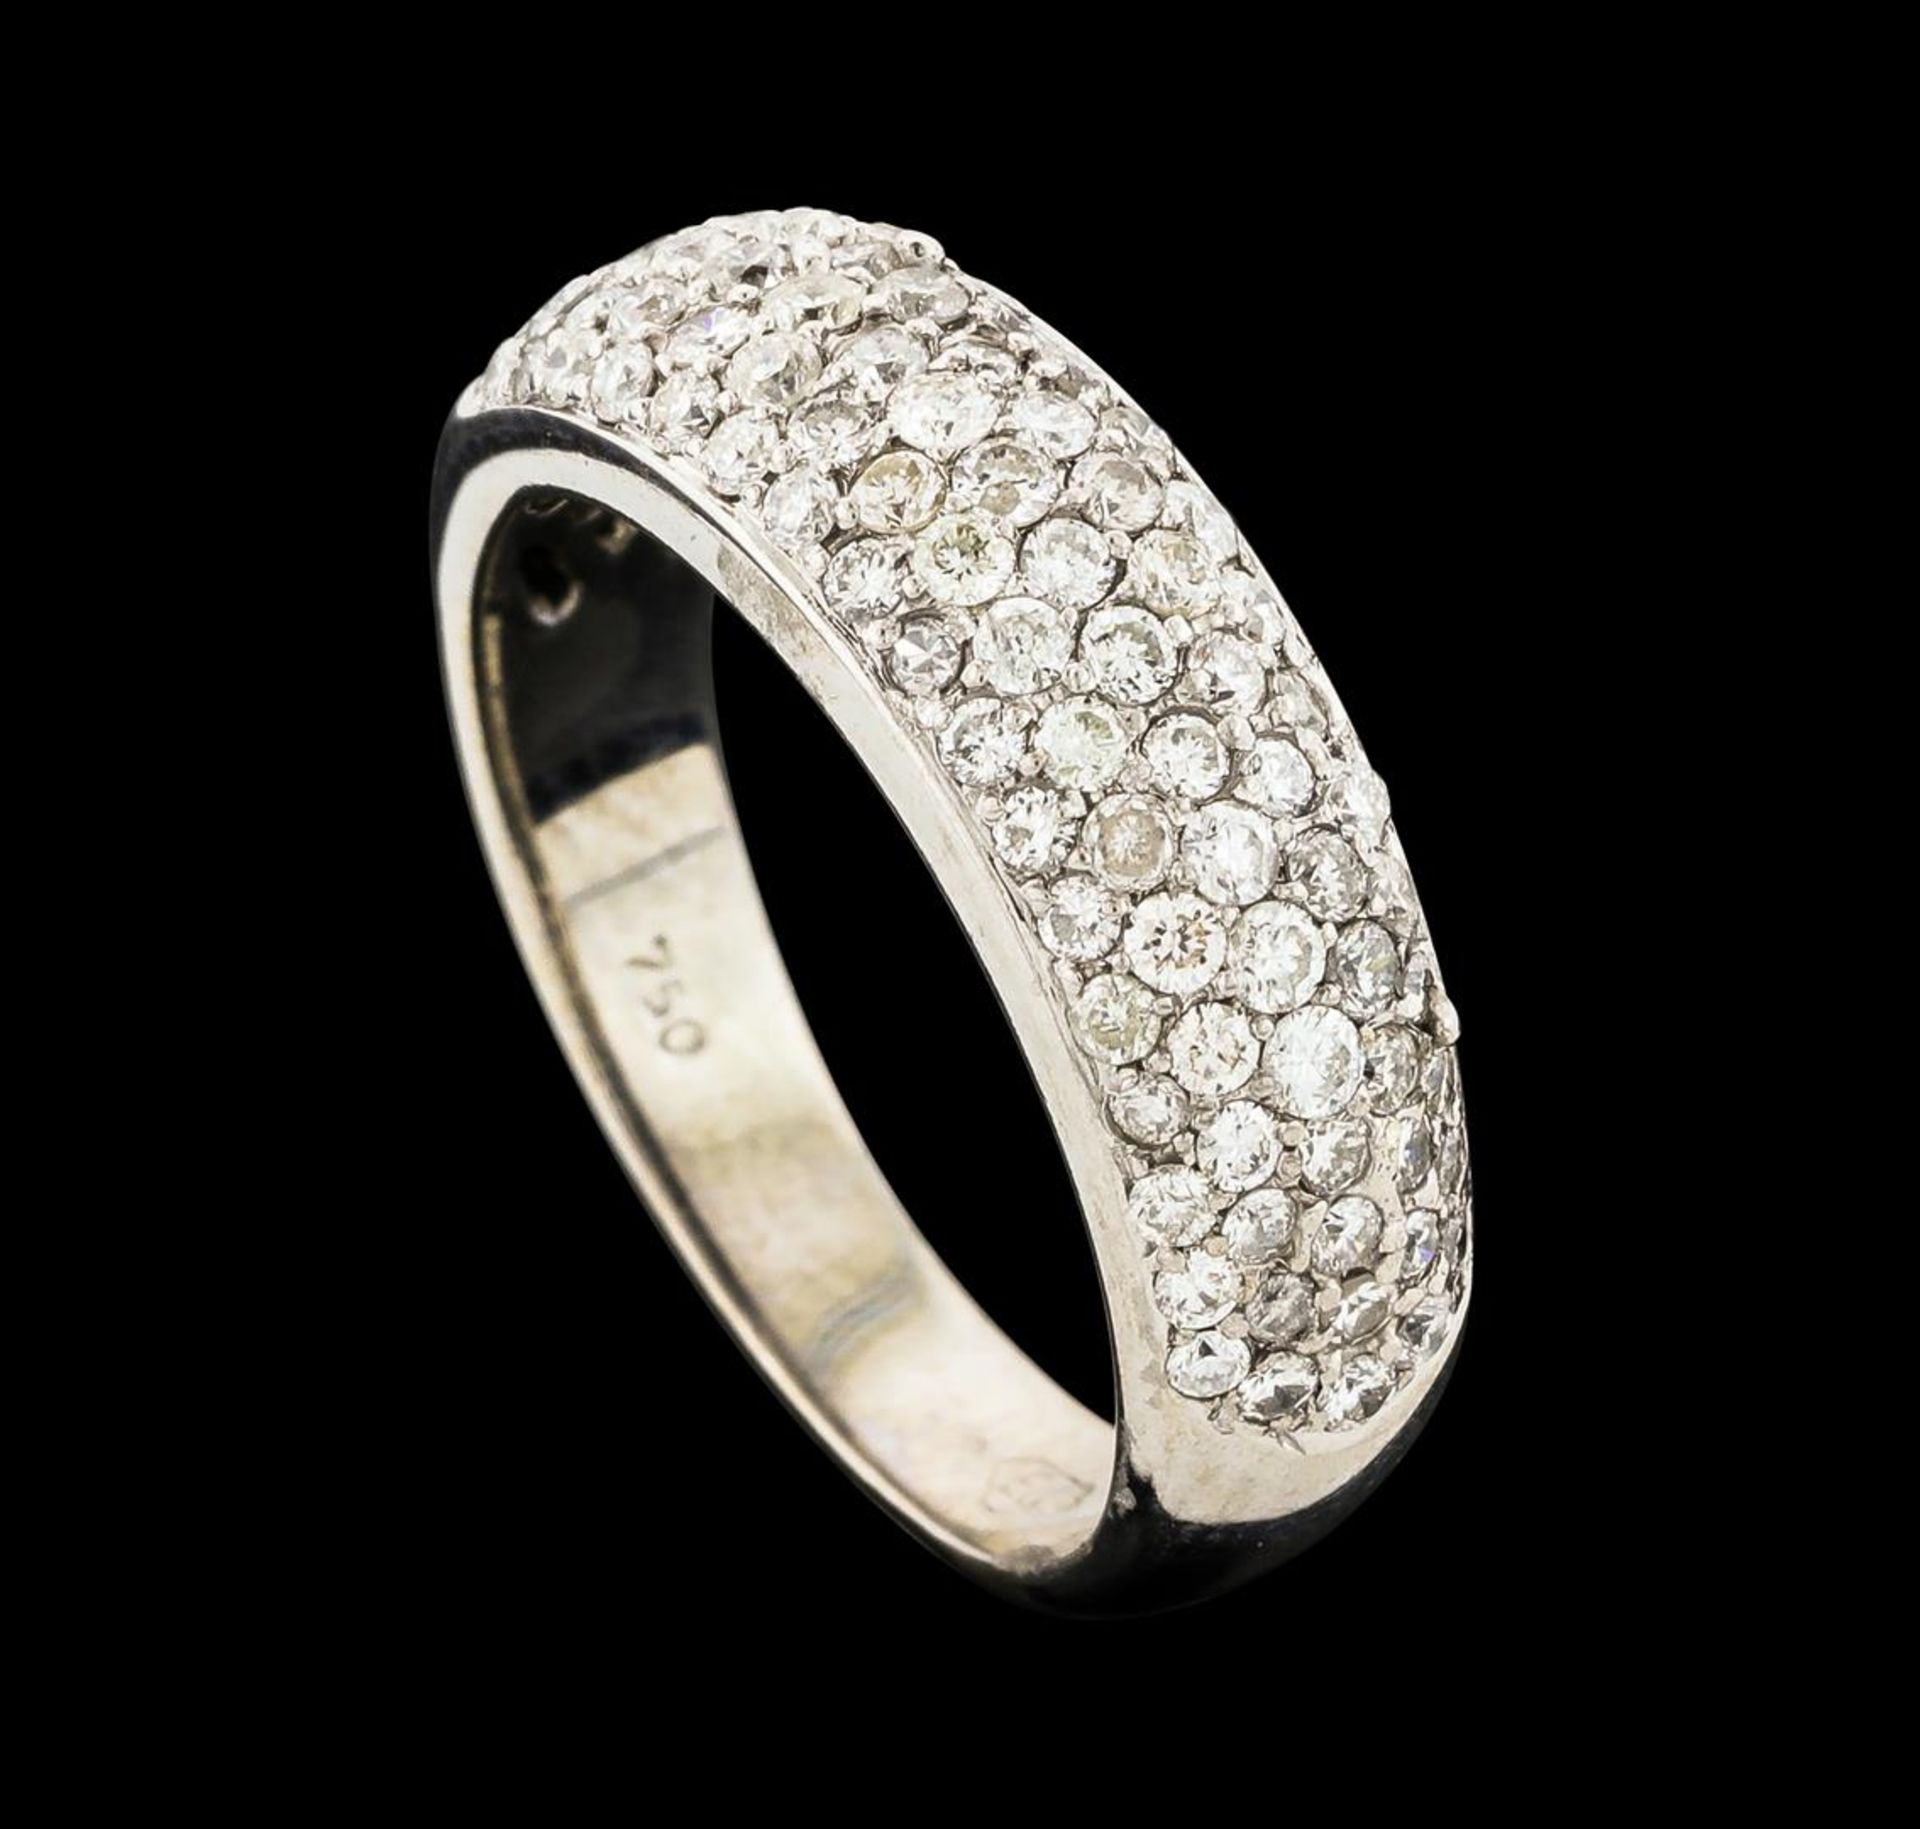 0.95 ctw Diamond Ring - 18KT White Gold - Image 4 of 5